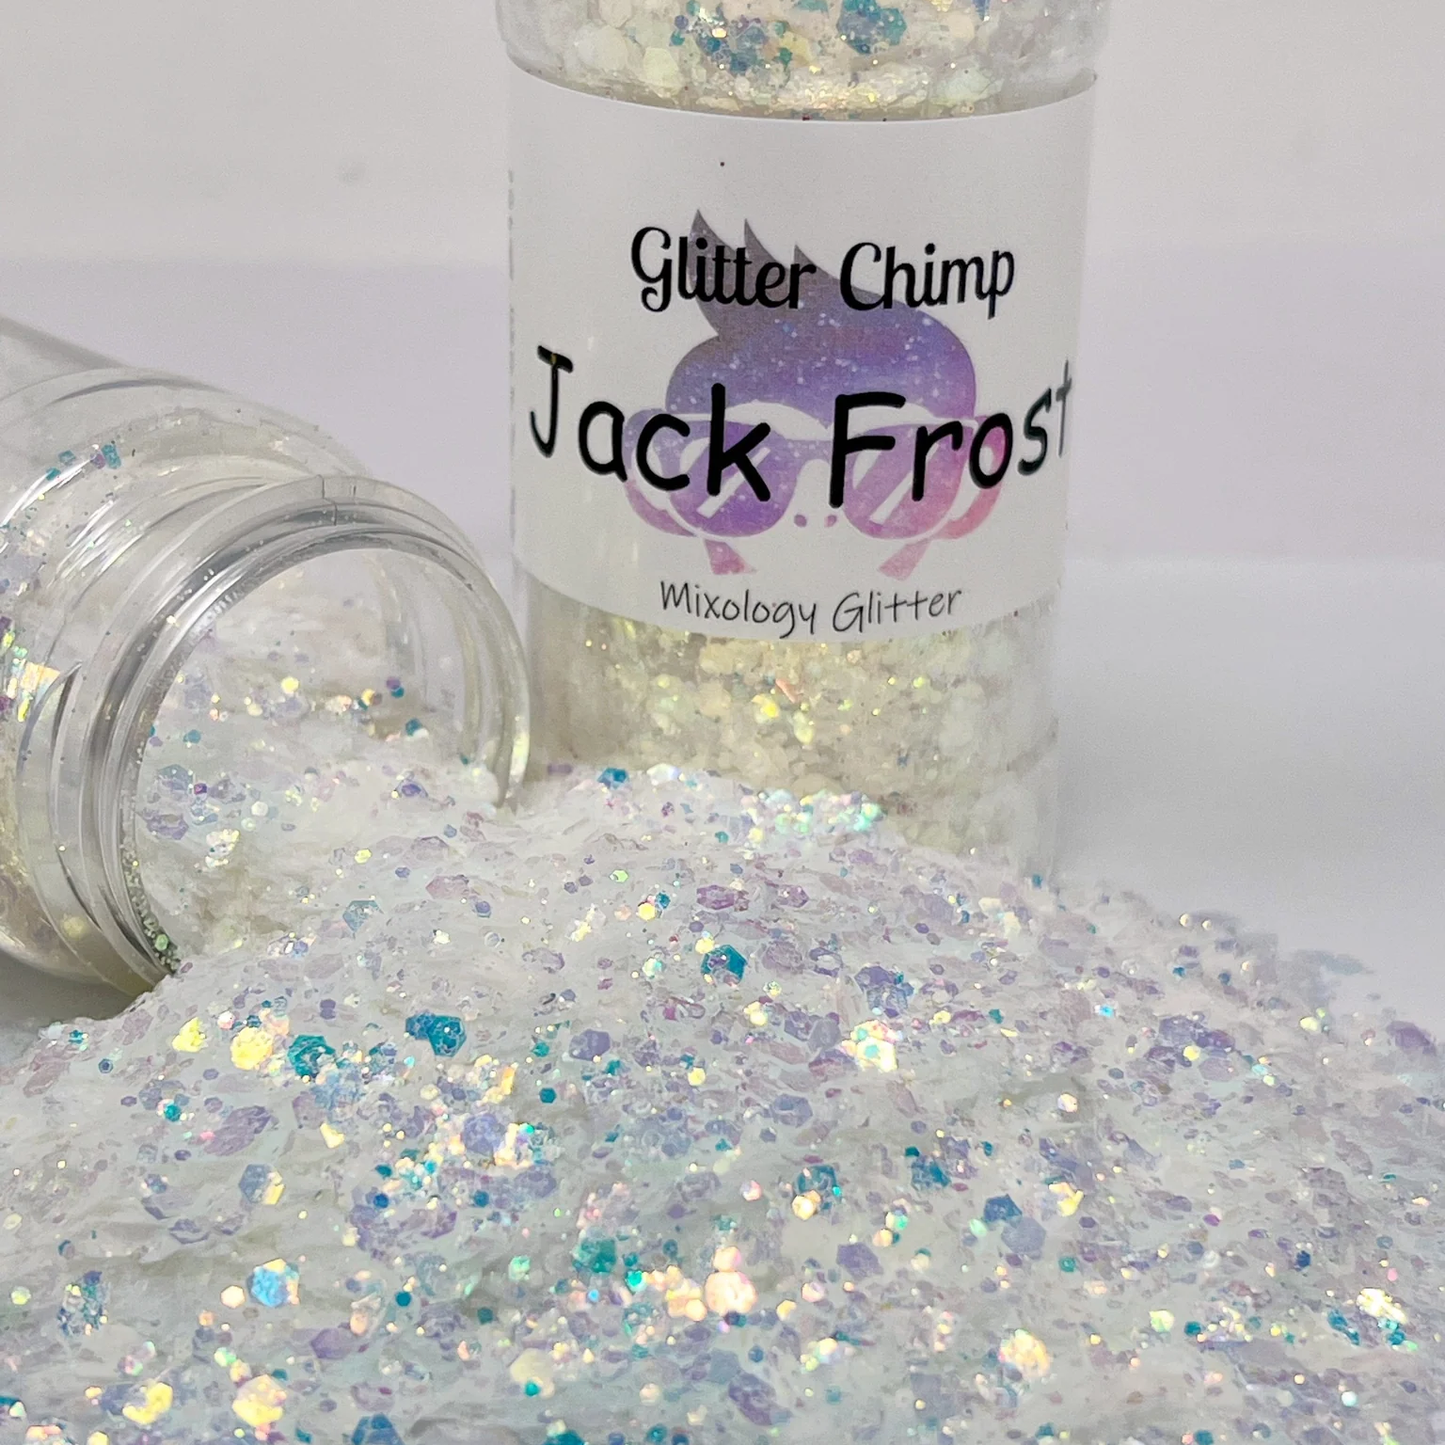 Glitter Chimp Jack Frost - Mixology Glitter